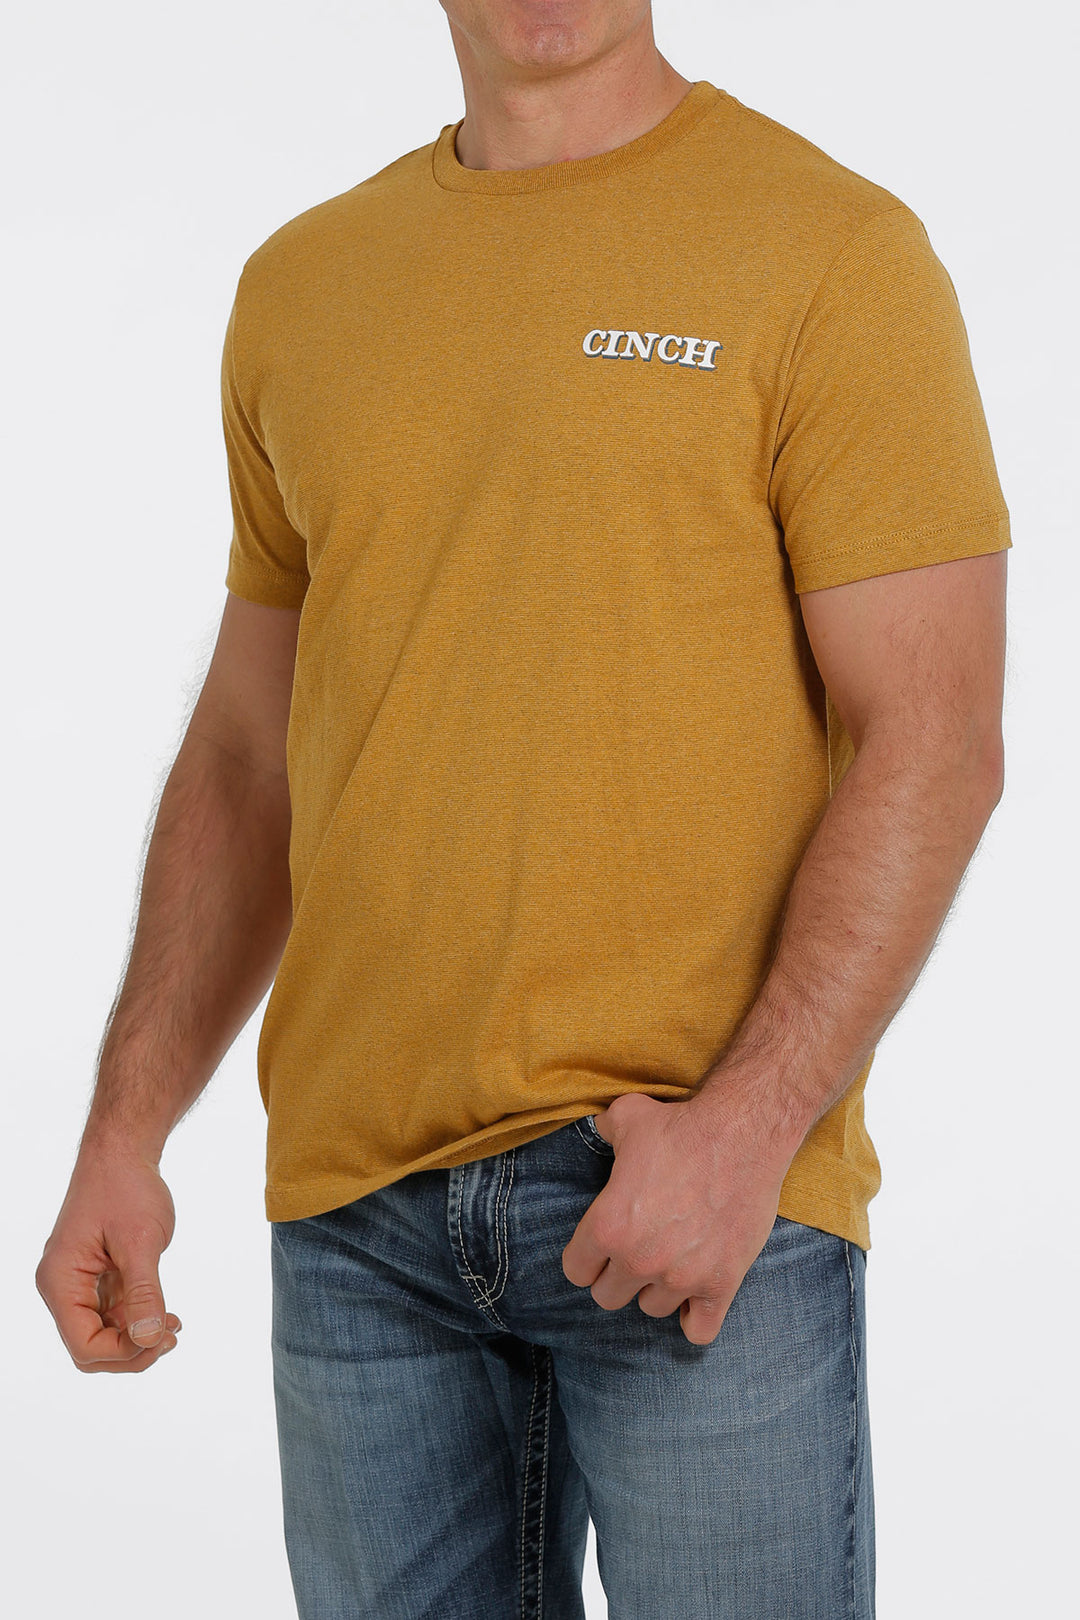 3/4 view Cinch | Gold Logo T-Shirt